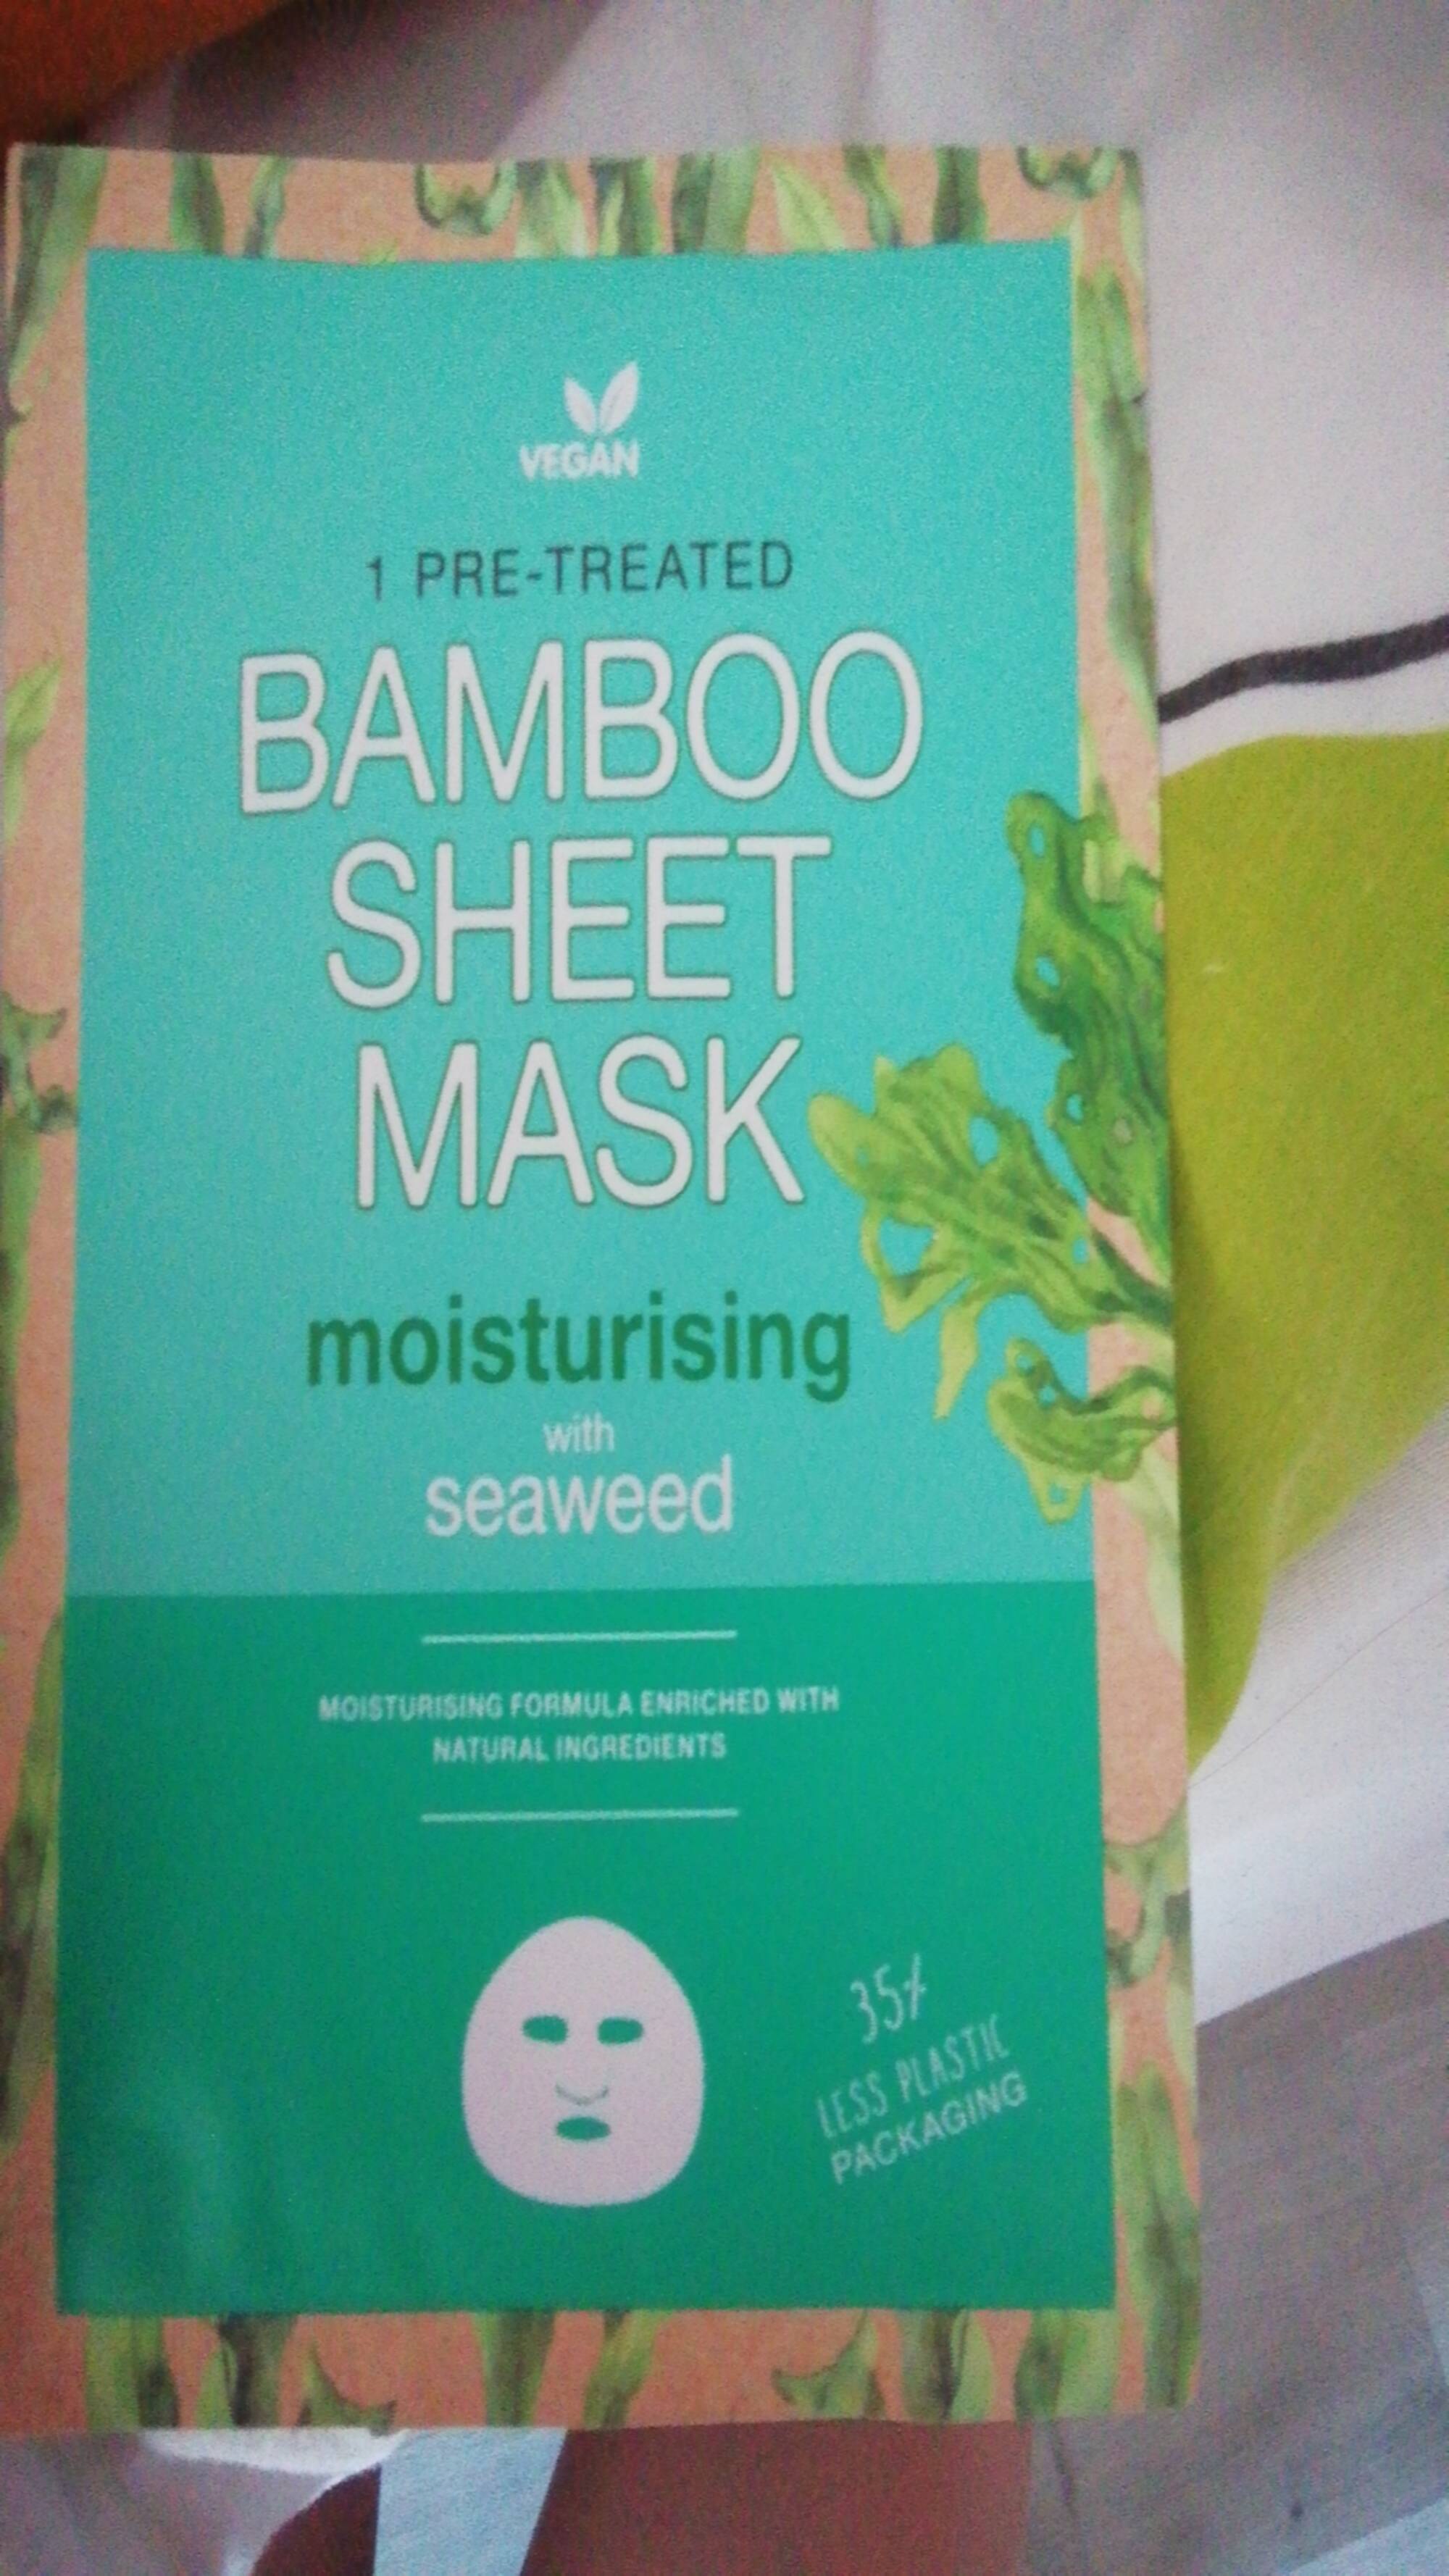 MAXBRANDS - Bamboo sheet mask moisturising with seaweed